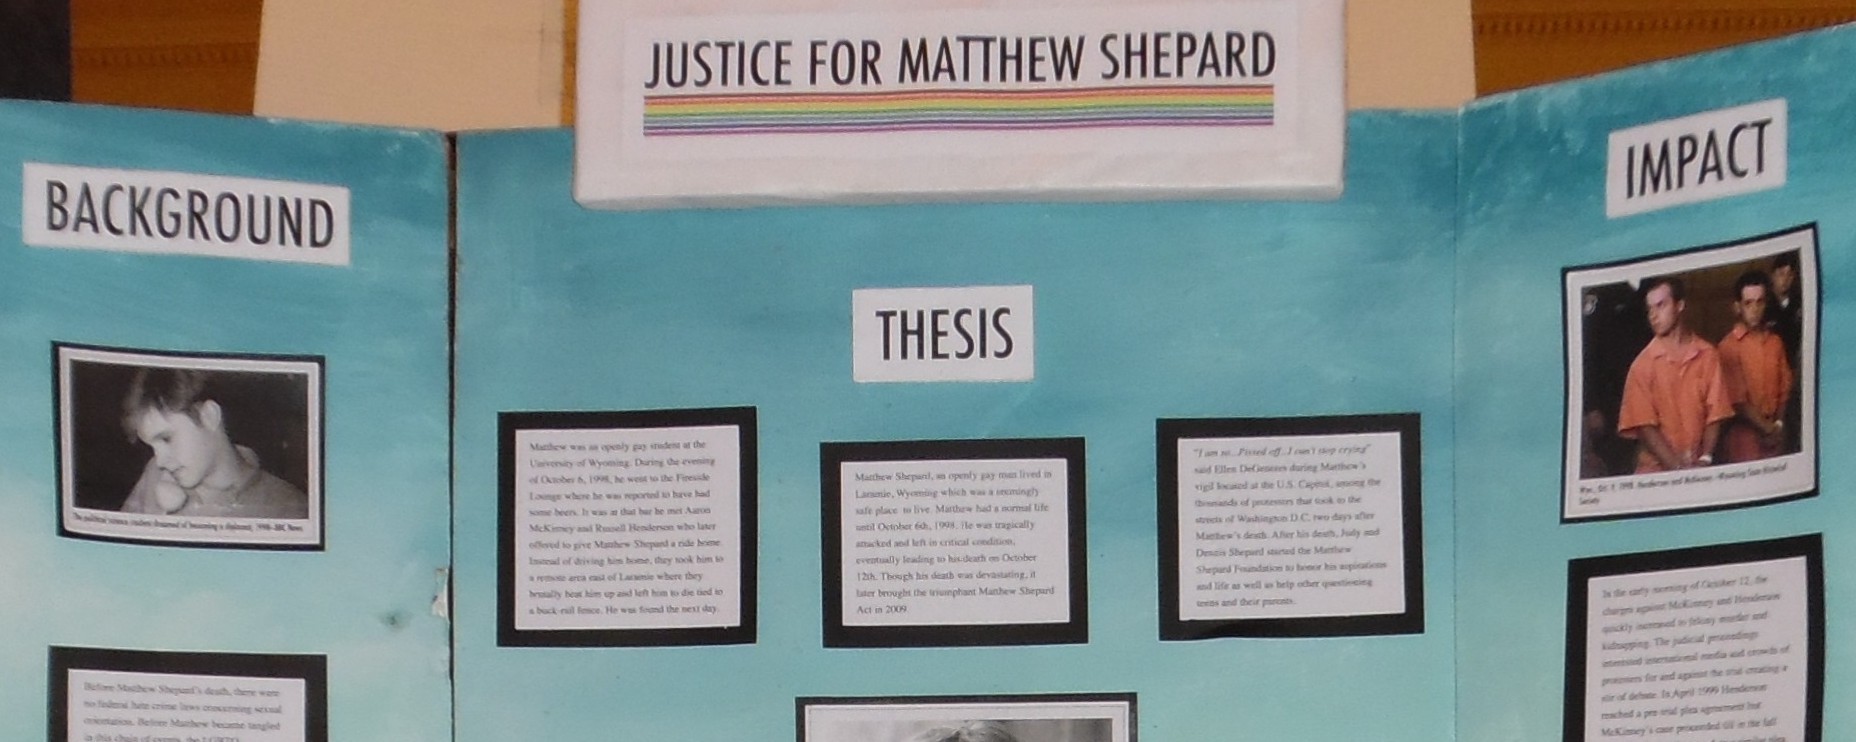 student exhibit board about Matthew Shepard